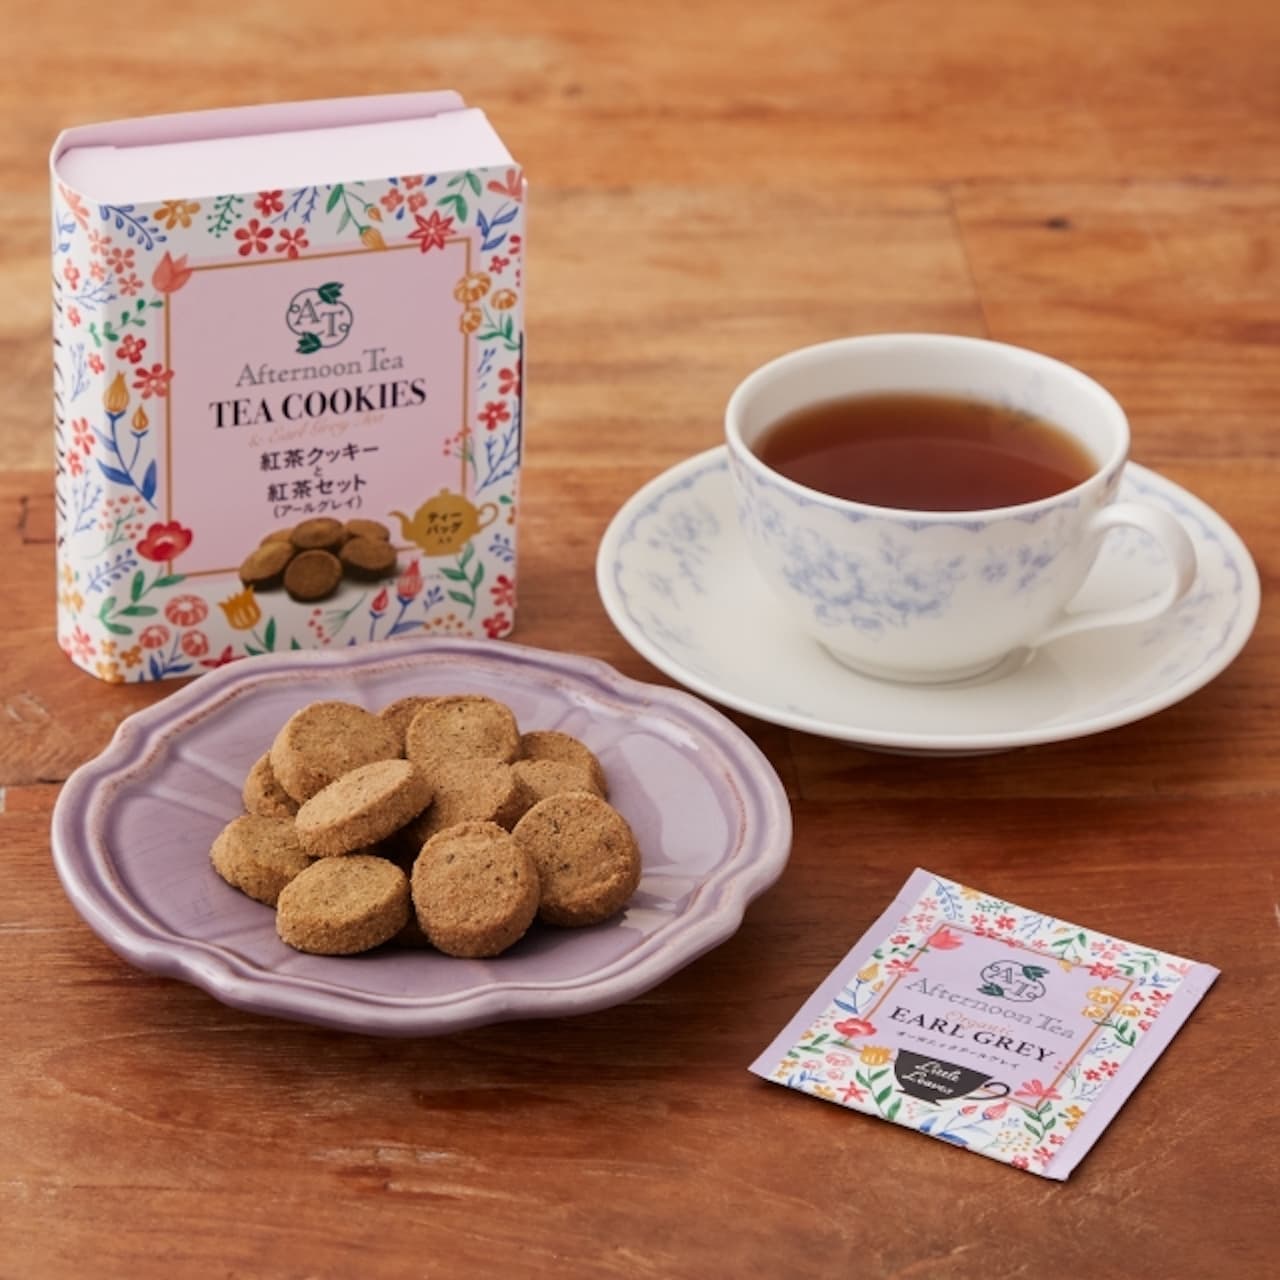 Black tea cookie and tea set (Earl Grey) supervised by Afternoon Tea